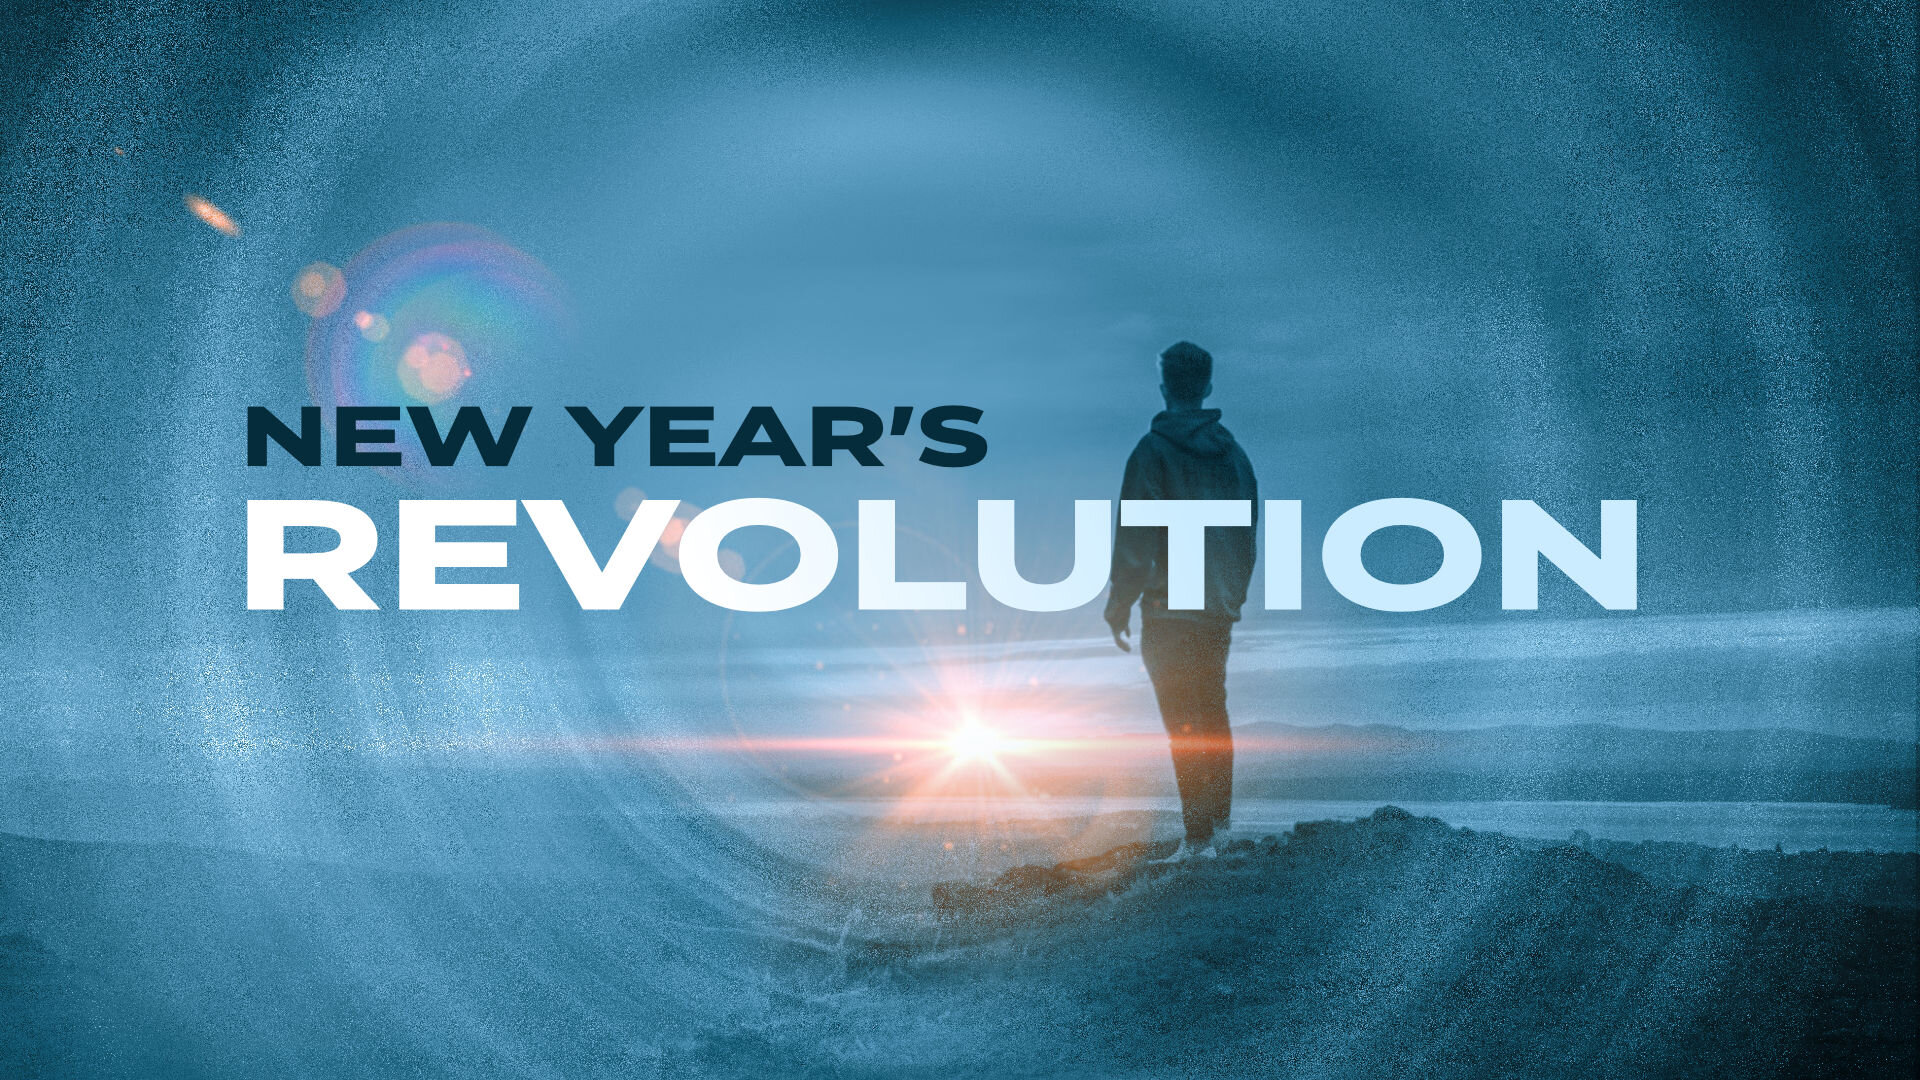 New Year's Revolution - Dec. 27, 2020